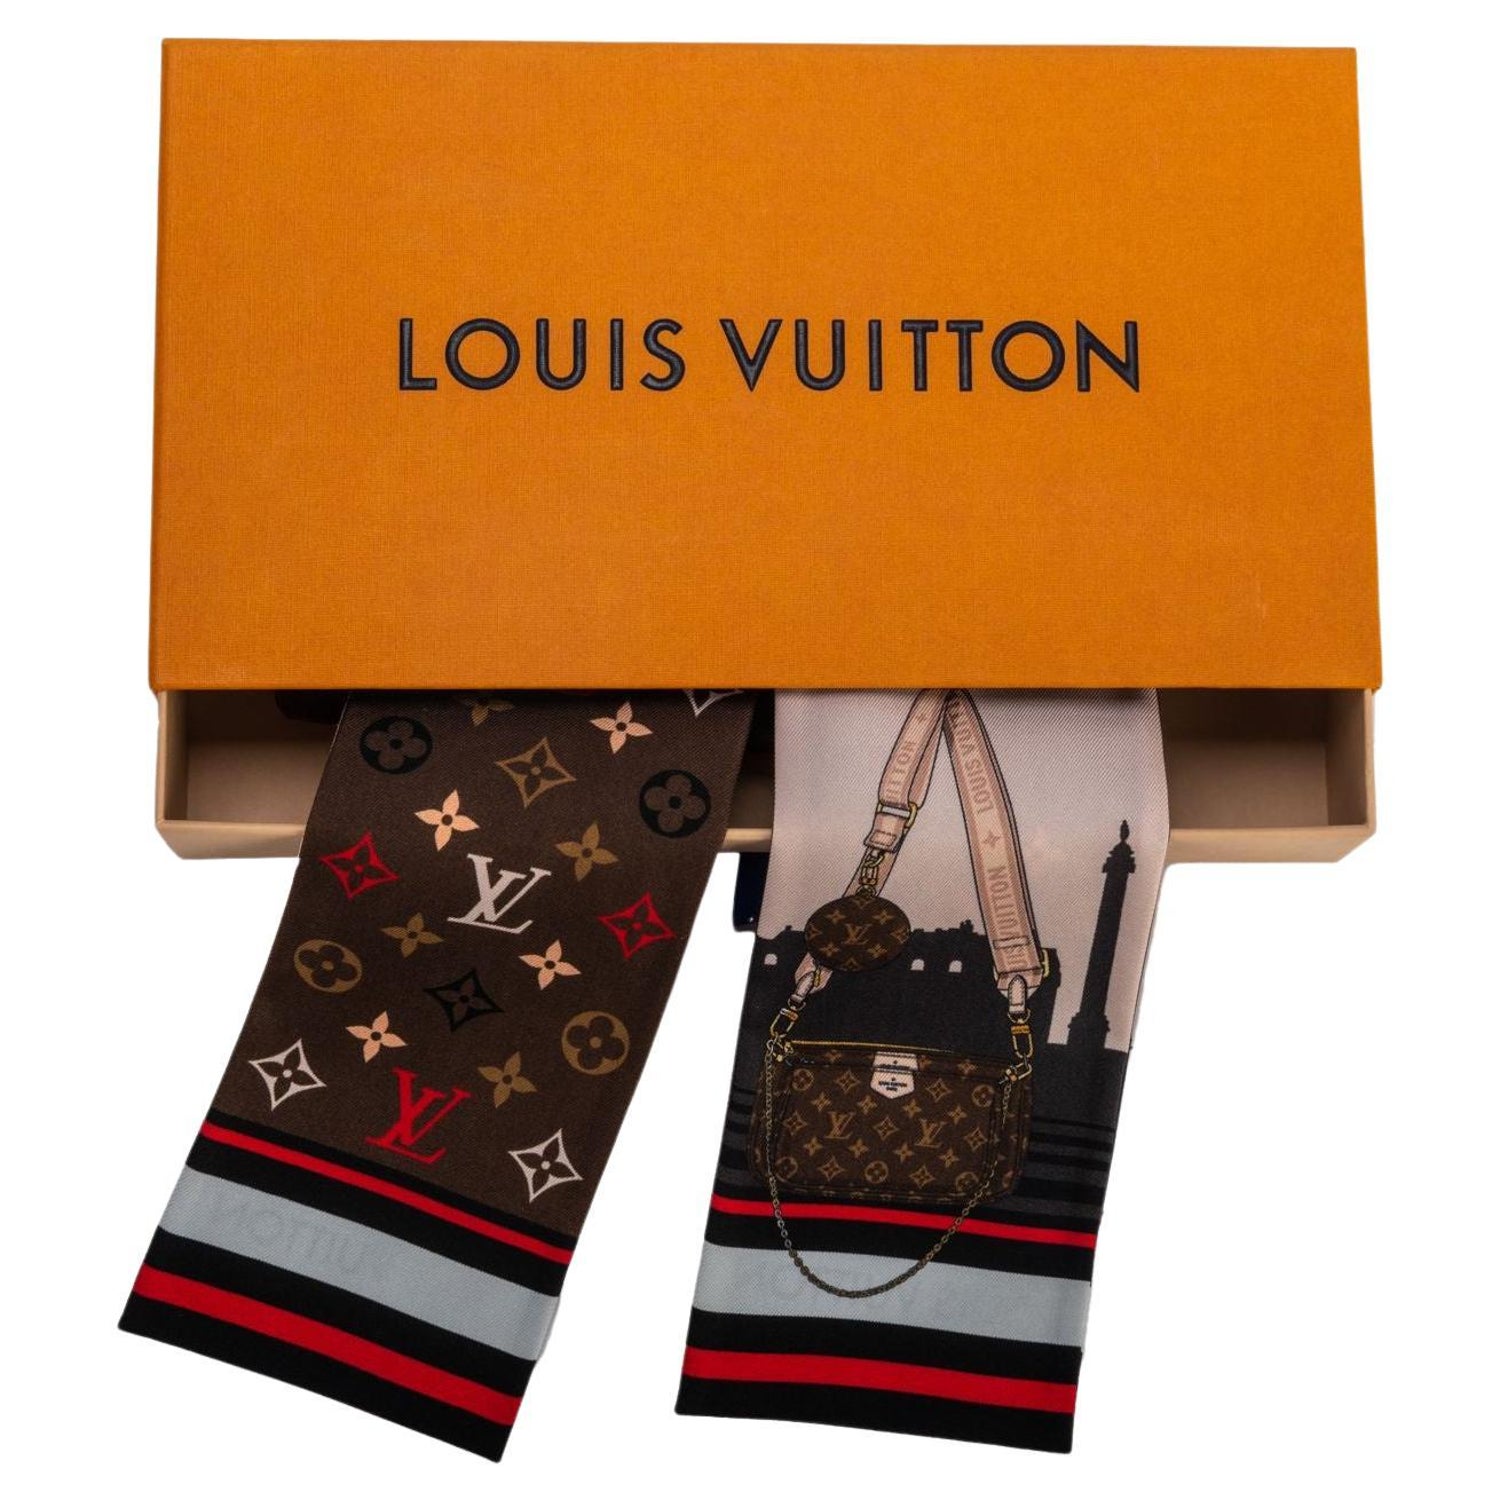 Louis Vuitton Keepall 45b - For Sale on 1stDibs